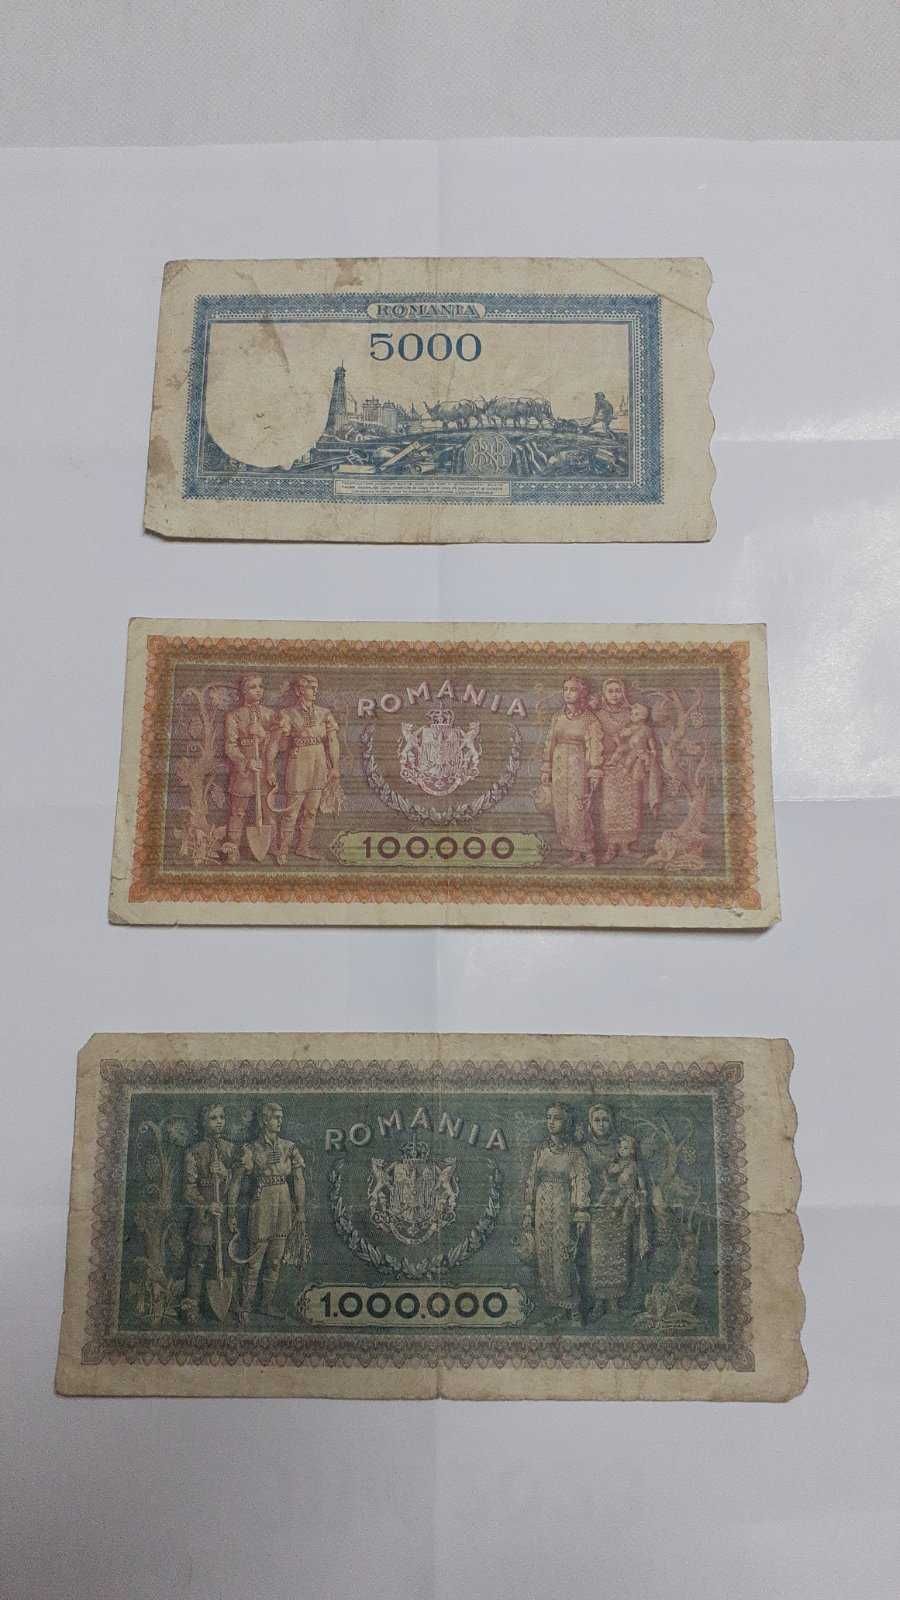 Vand bancnote vechi romanesti